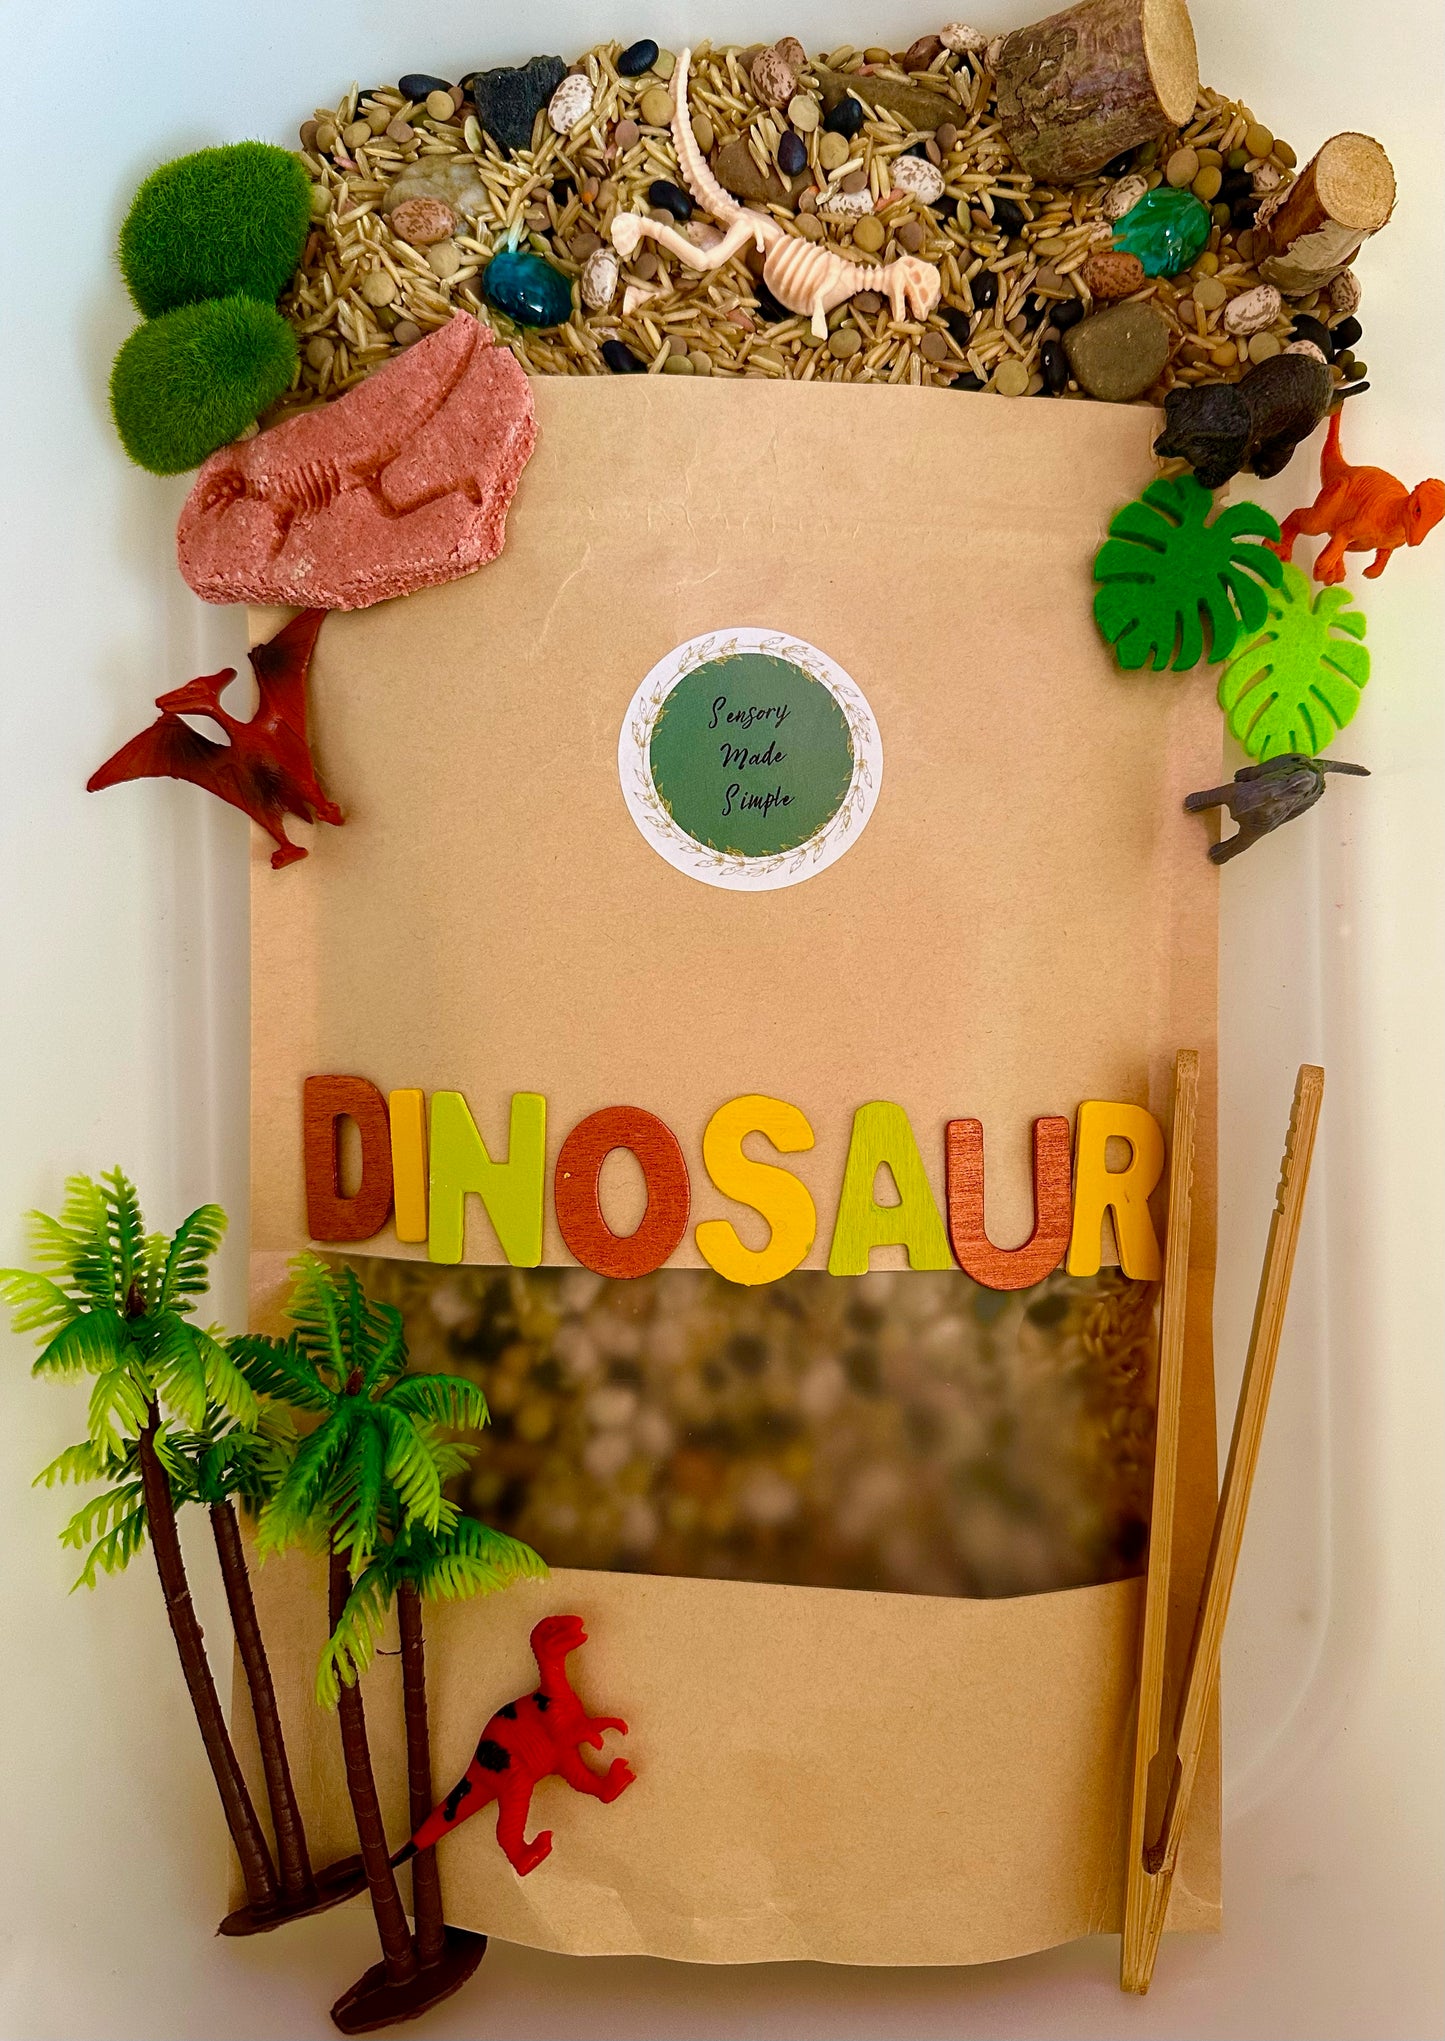 Dinosaur Sensory Kit by Sensory Made Simple